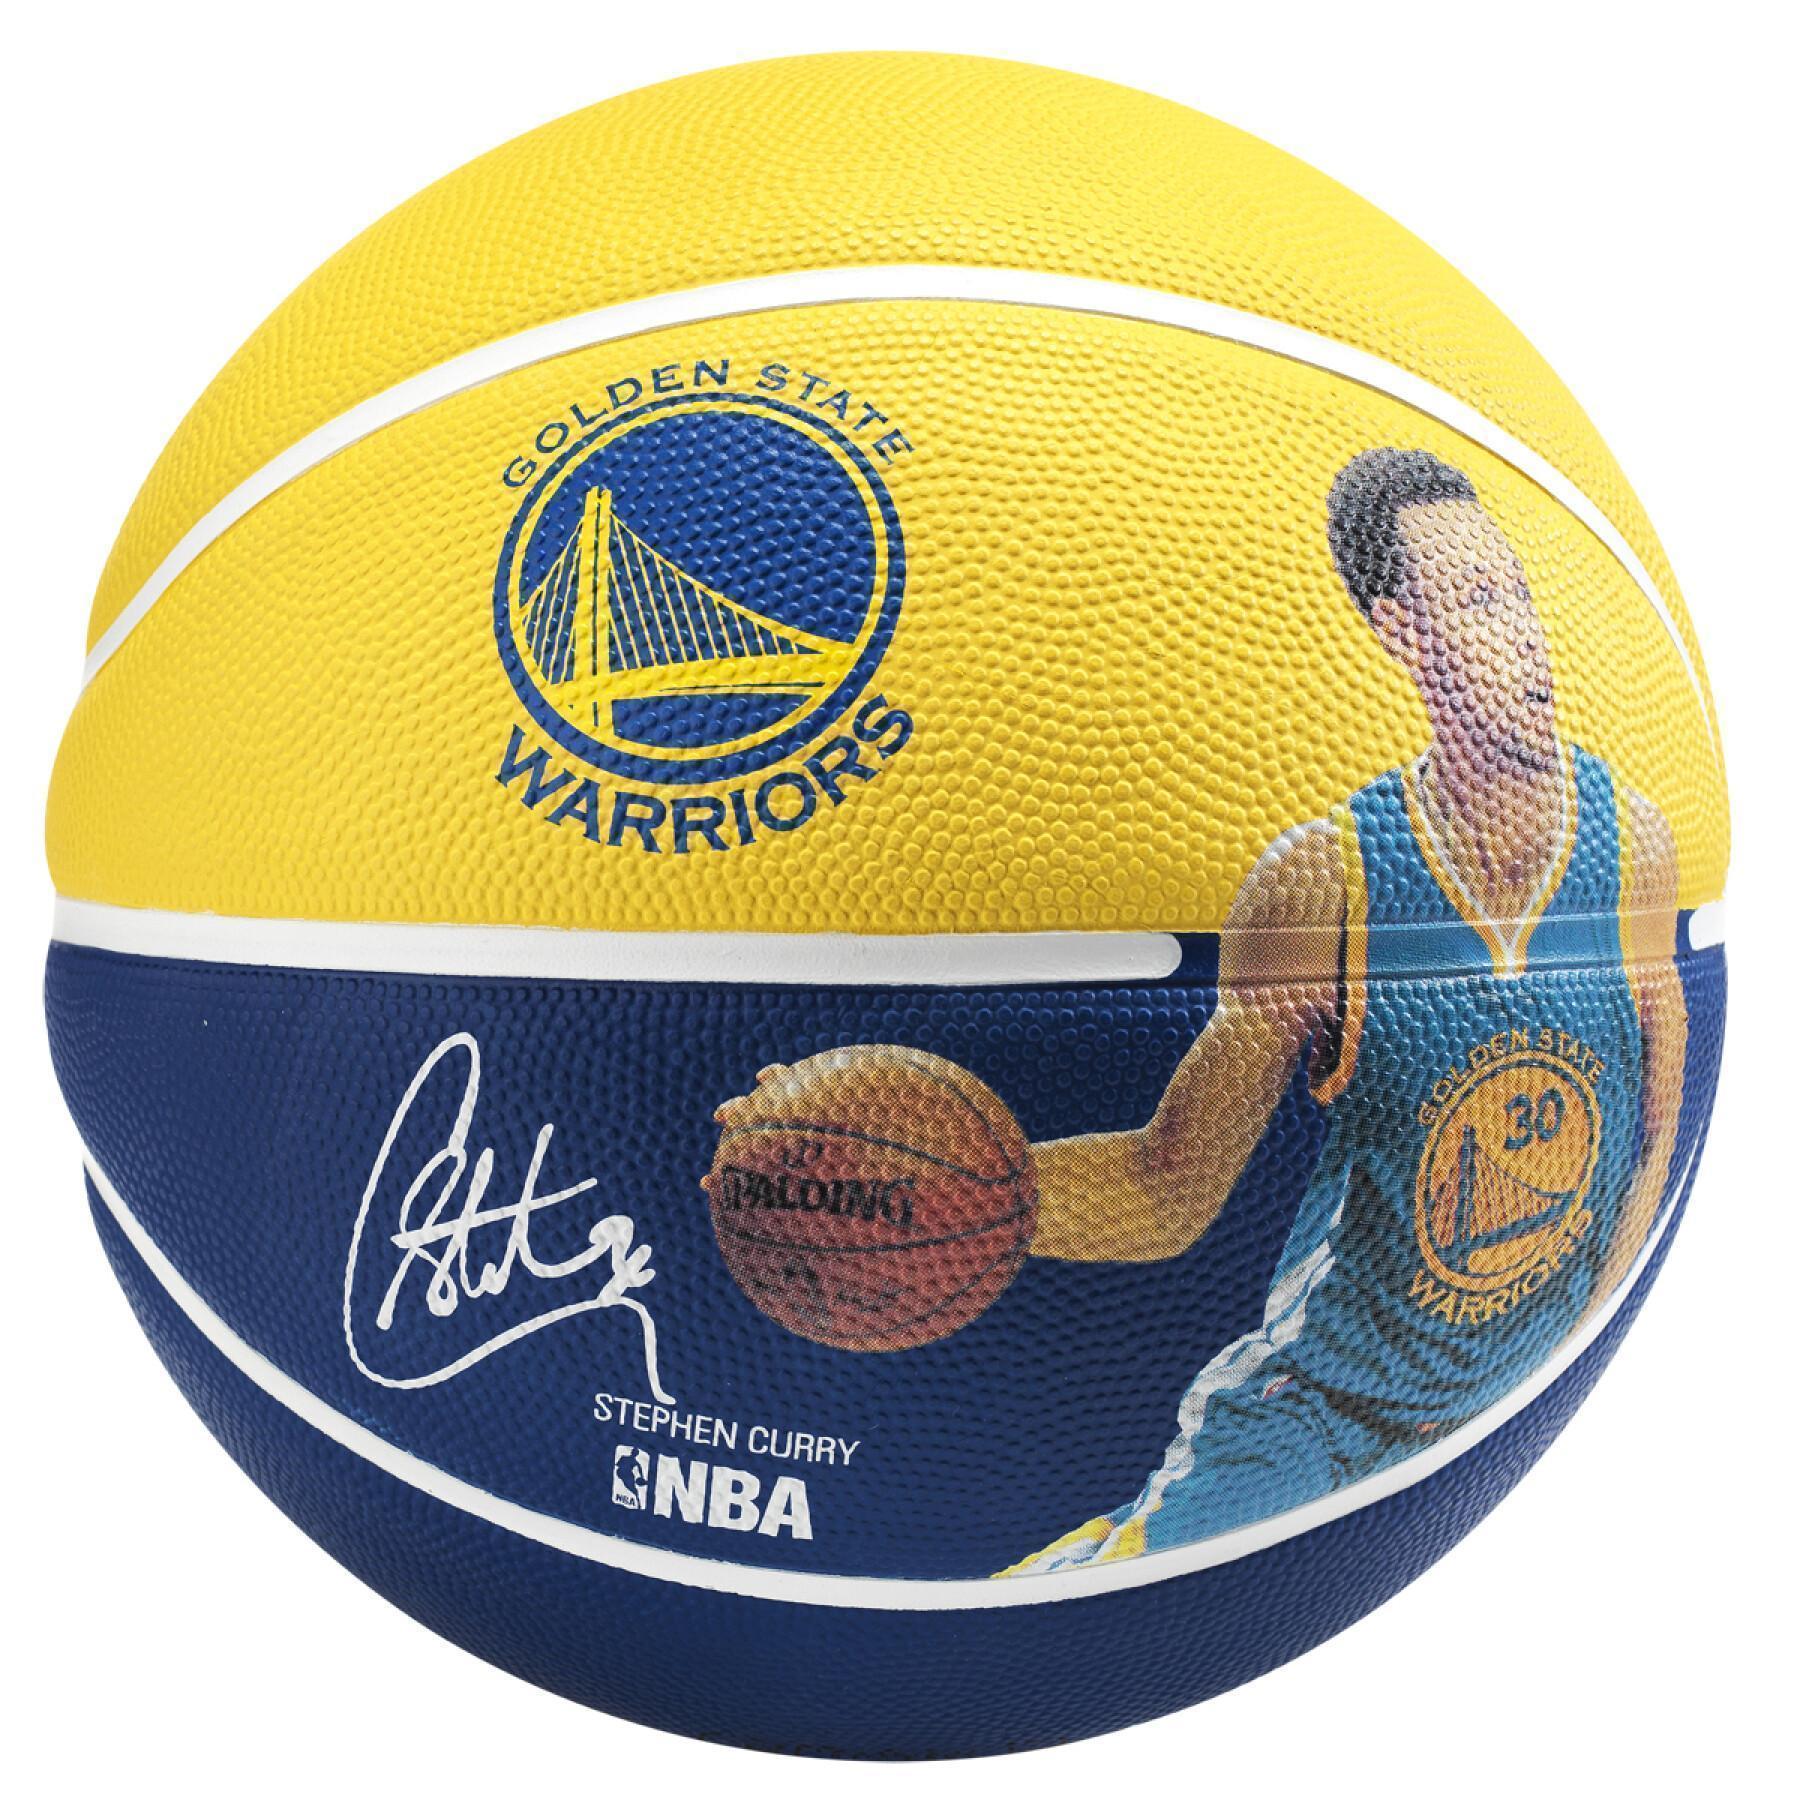 Ballon Spalding Player Stephen Curry